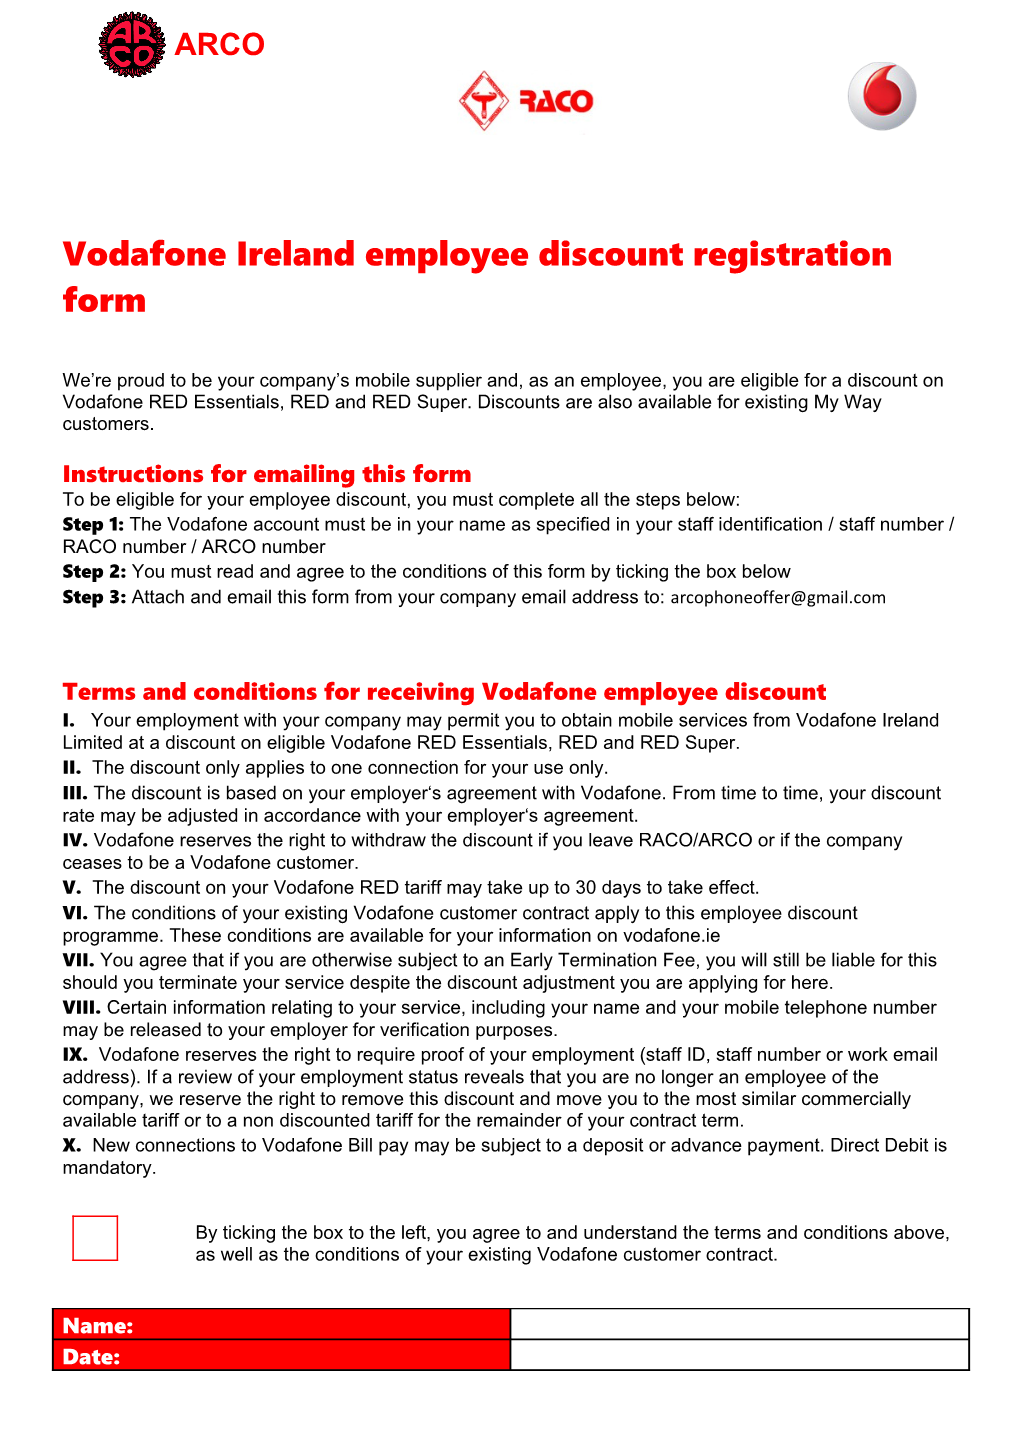 Vodafone Ireland Employee Discount Registration Form